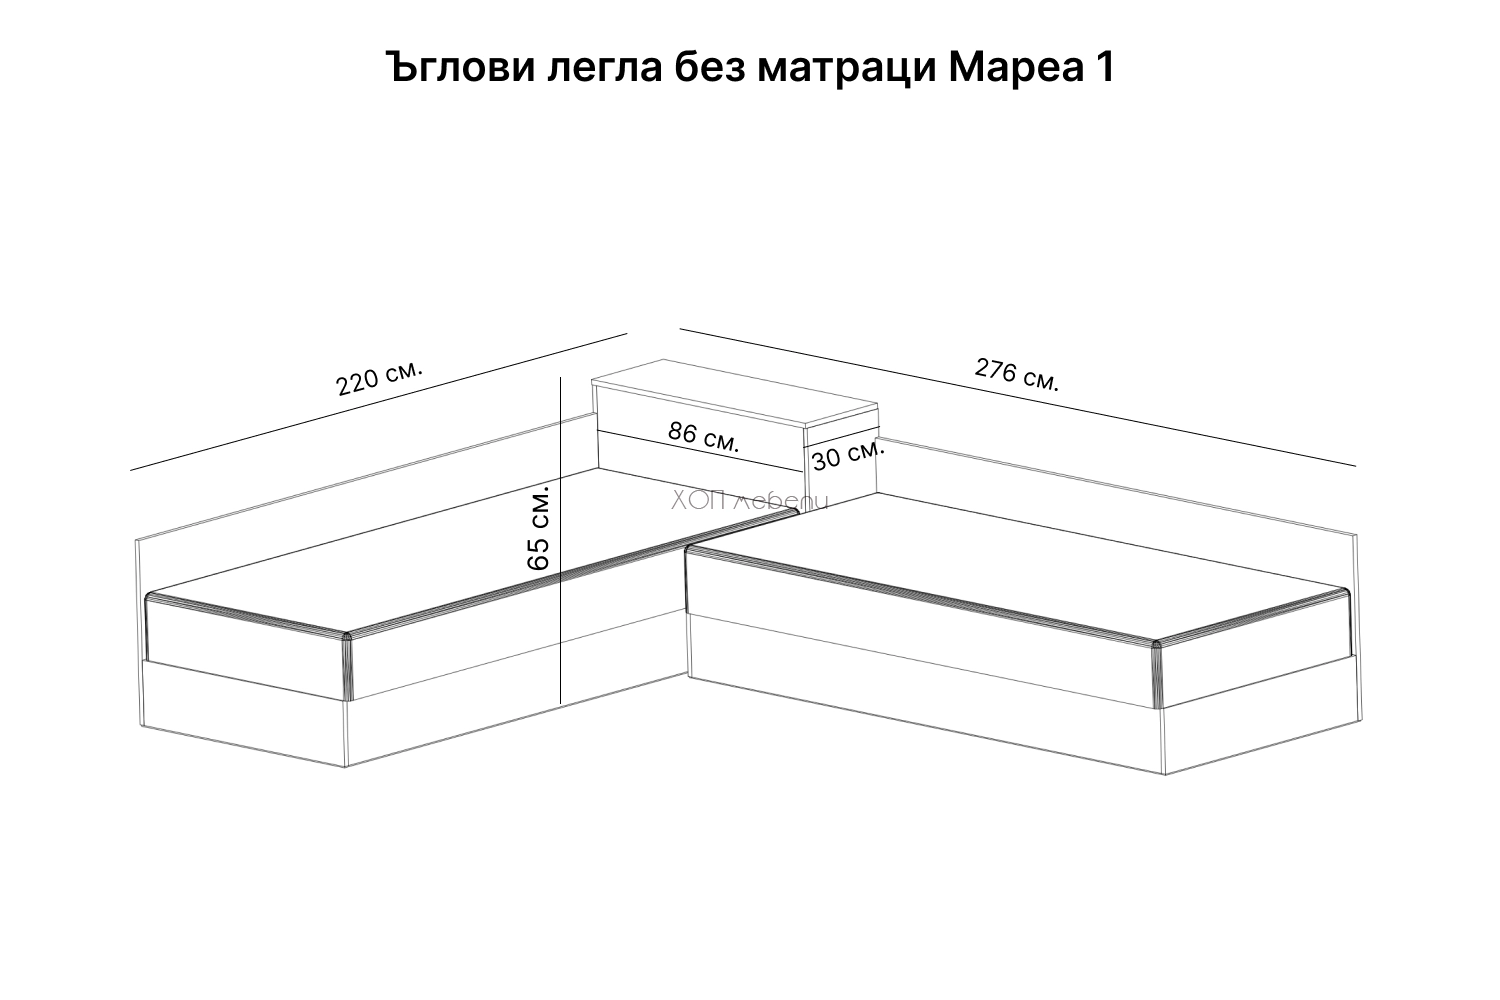 Размери на Ъглови легла с матраци Мареа 1 - пасифик ID 12185